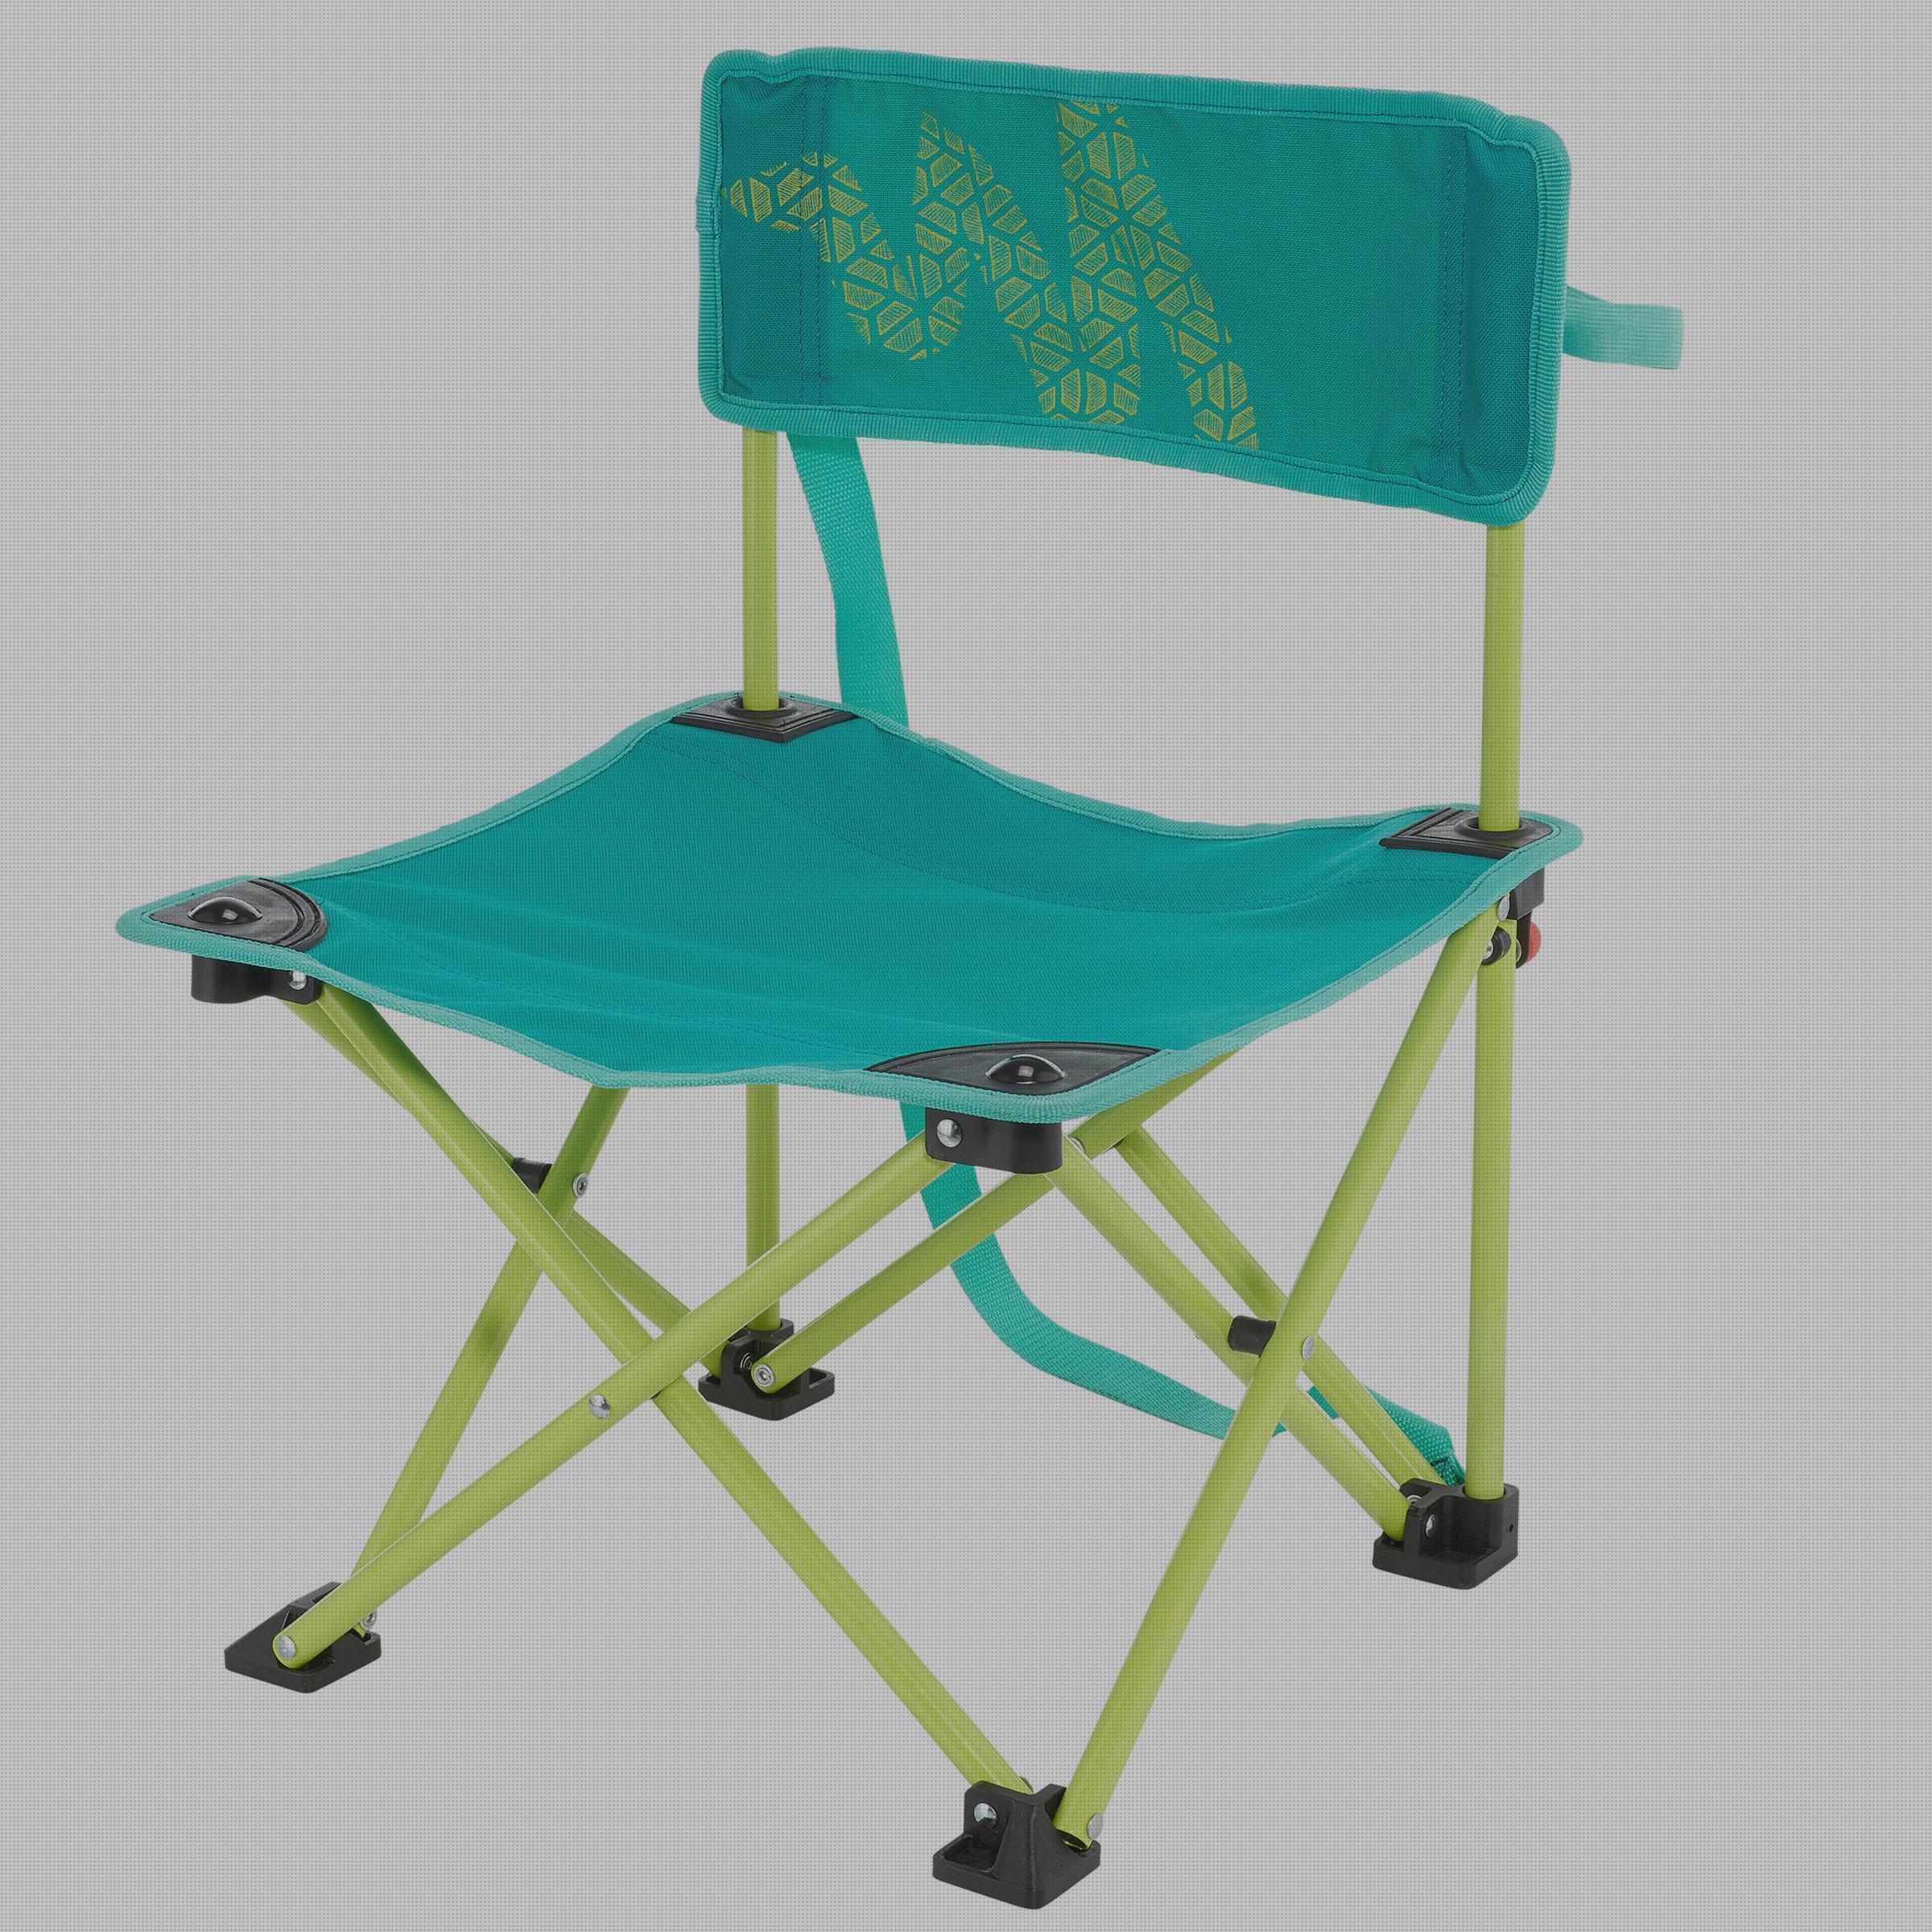 Review de sillas niño camping